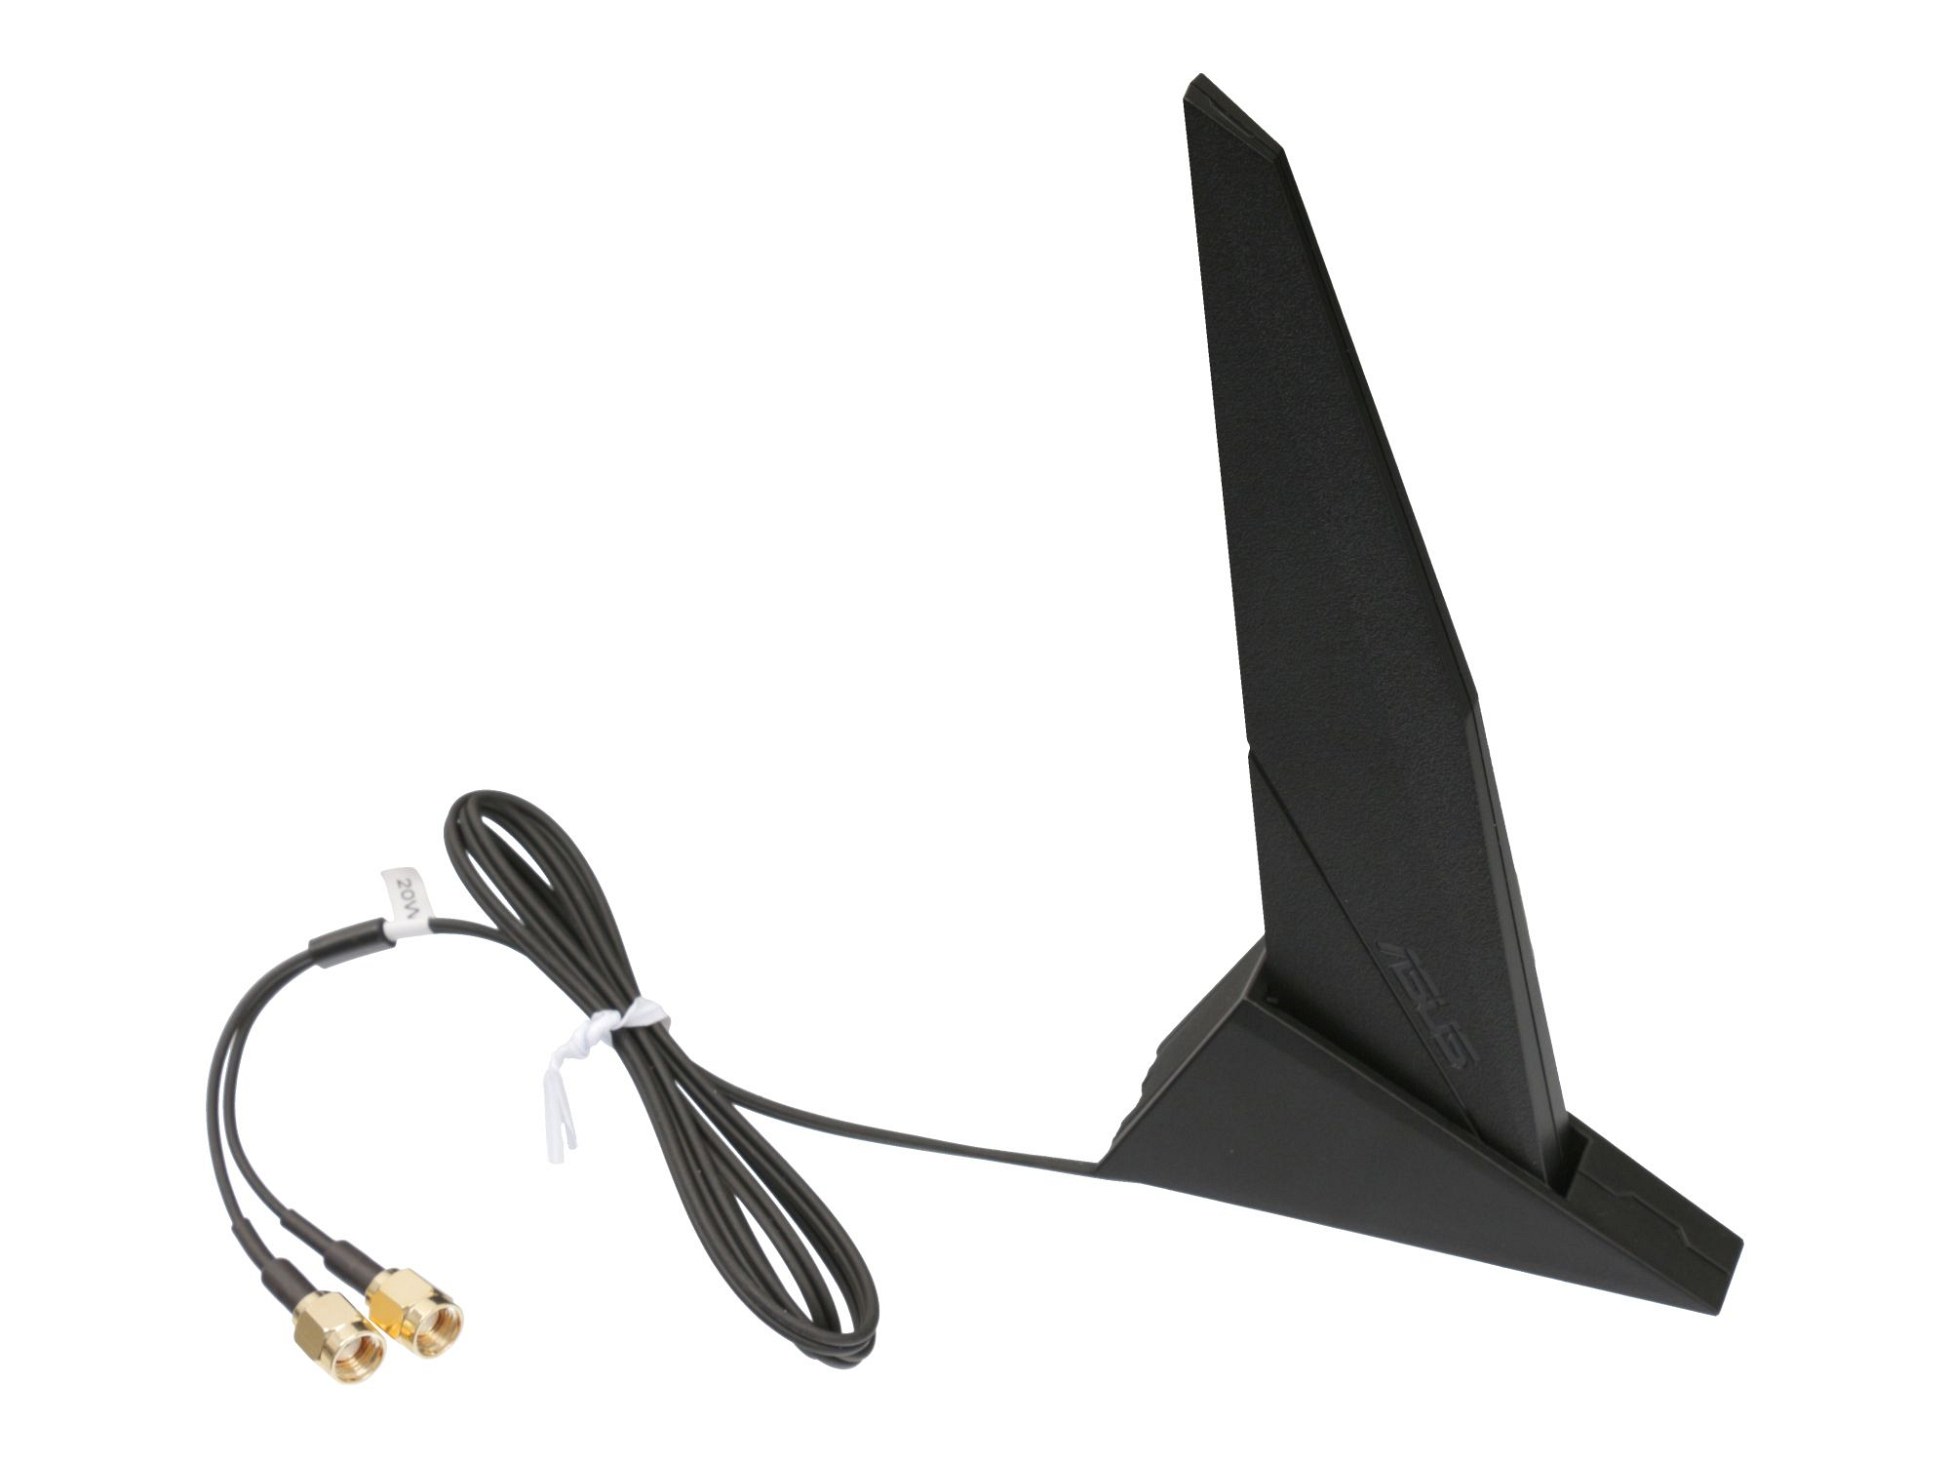 Externe Asus RP-SMA DIPOLE Antenne für Asus ROG Maximus XII Apex